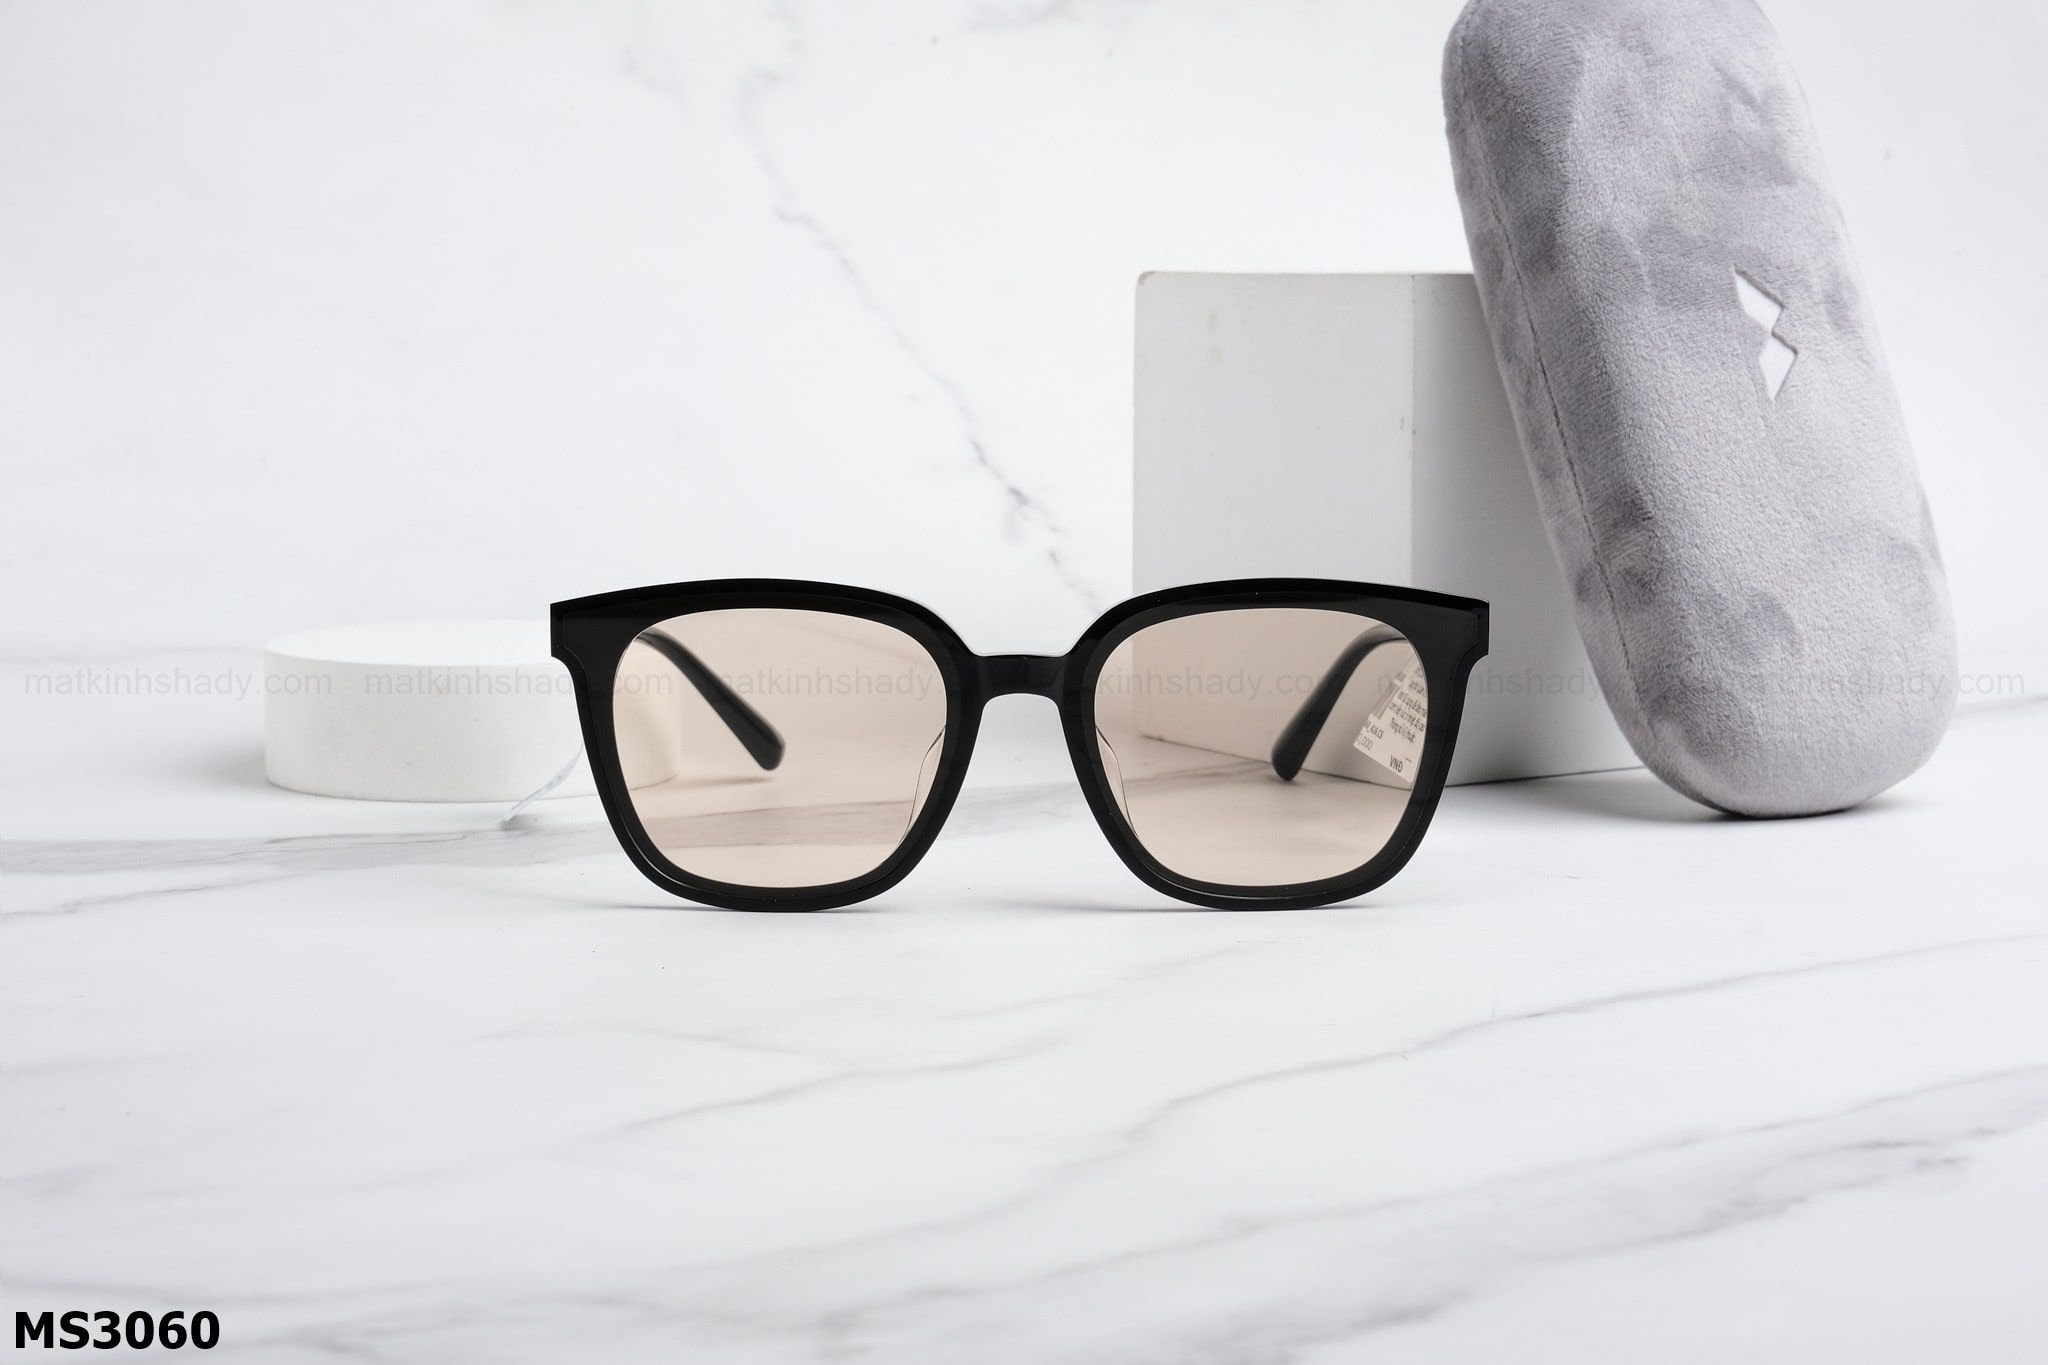  Molsion Eyewear - Sunglasses - MS3060 